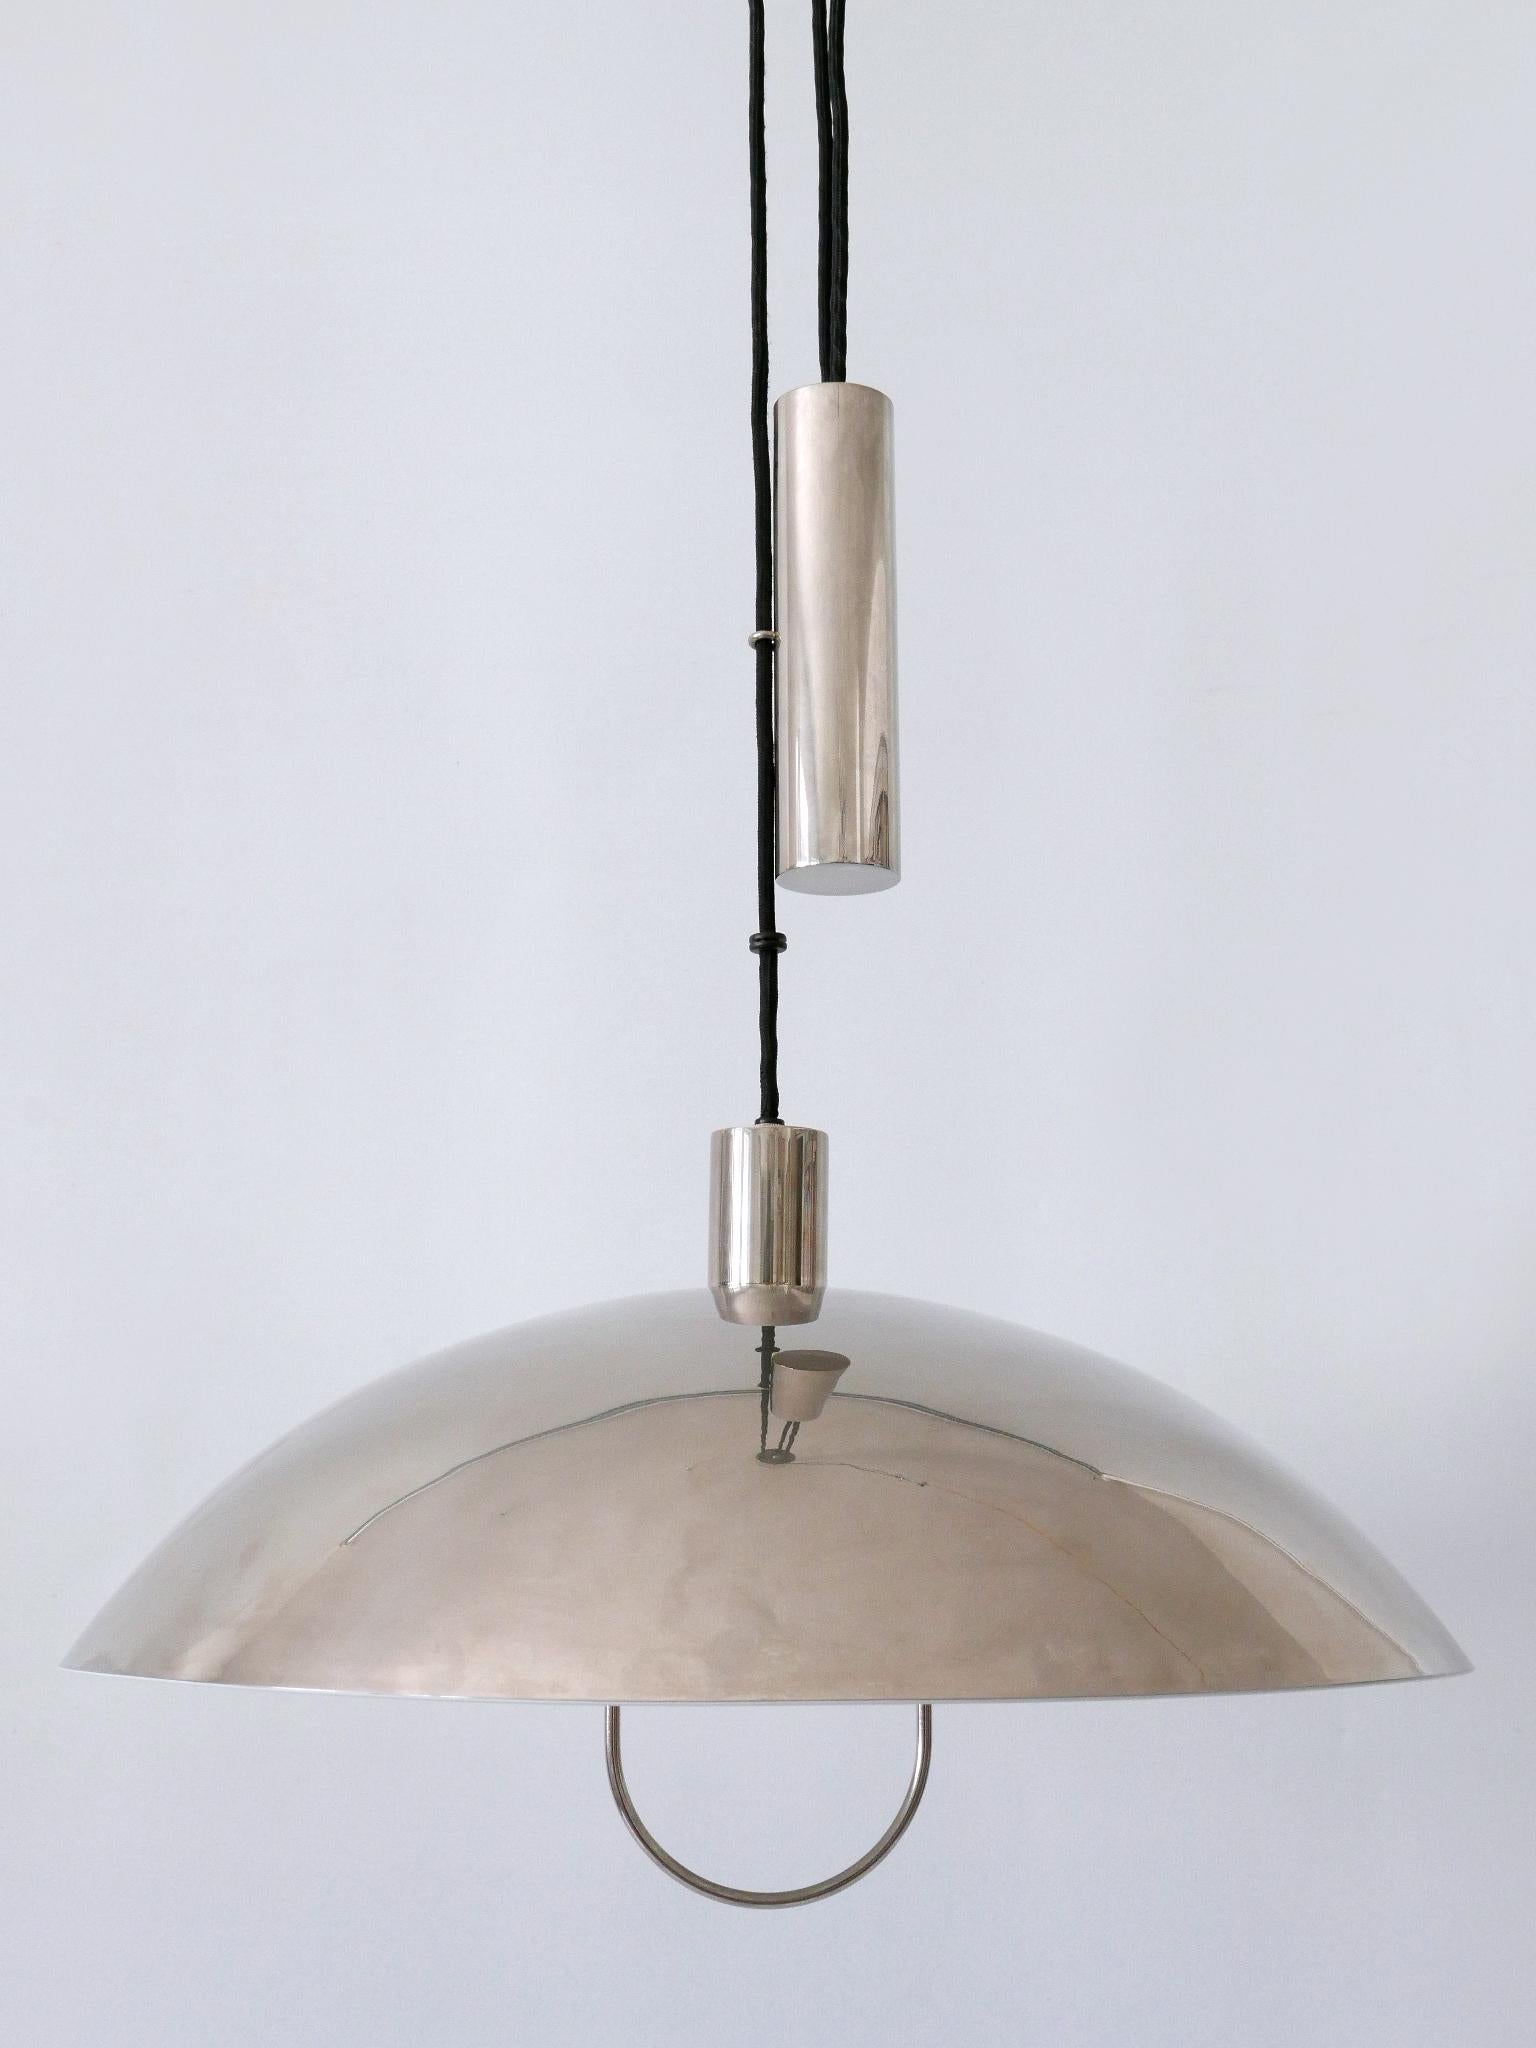 Early Tecnolumen Pendant Lamp 'Bauhaus HMB 25/500' by Marianne Brandt 1980s In Good Condition For Sale In Munich, DE